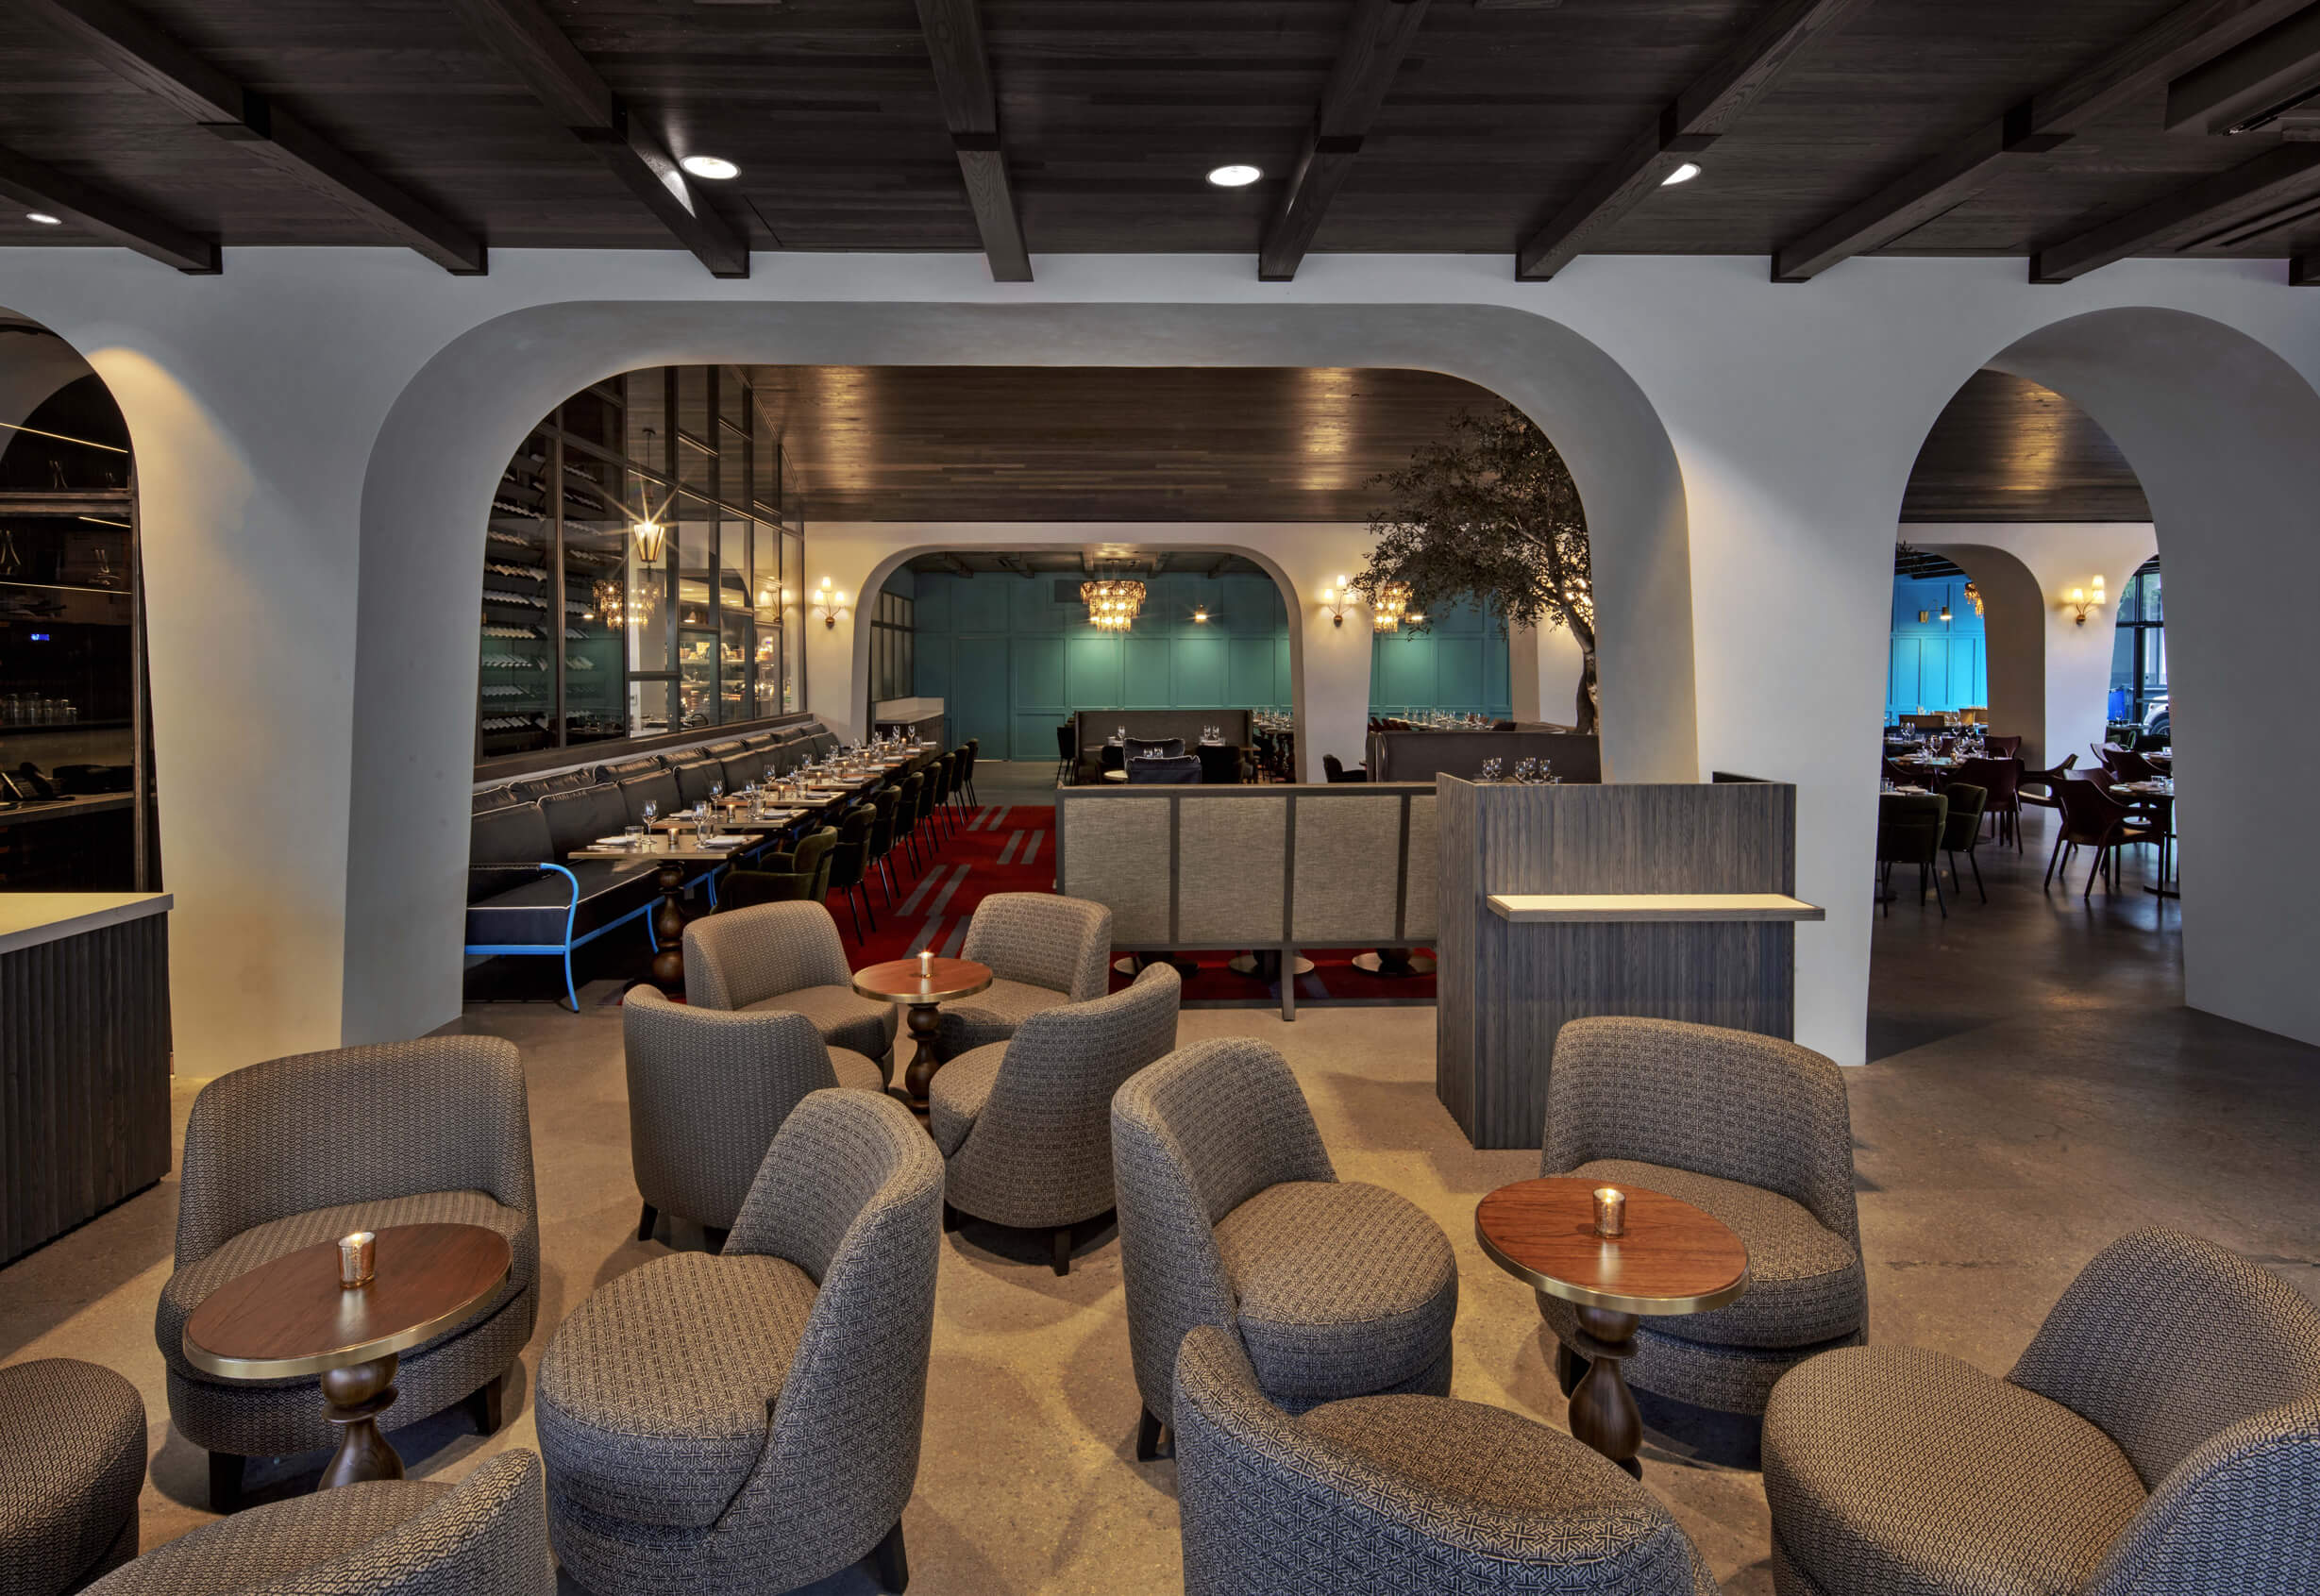 Scottsdale Arboleda Restaurant designed by Mark Zeff